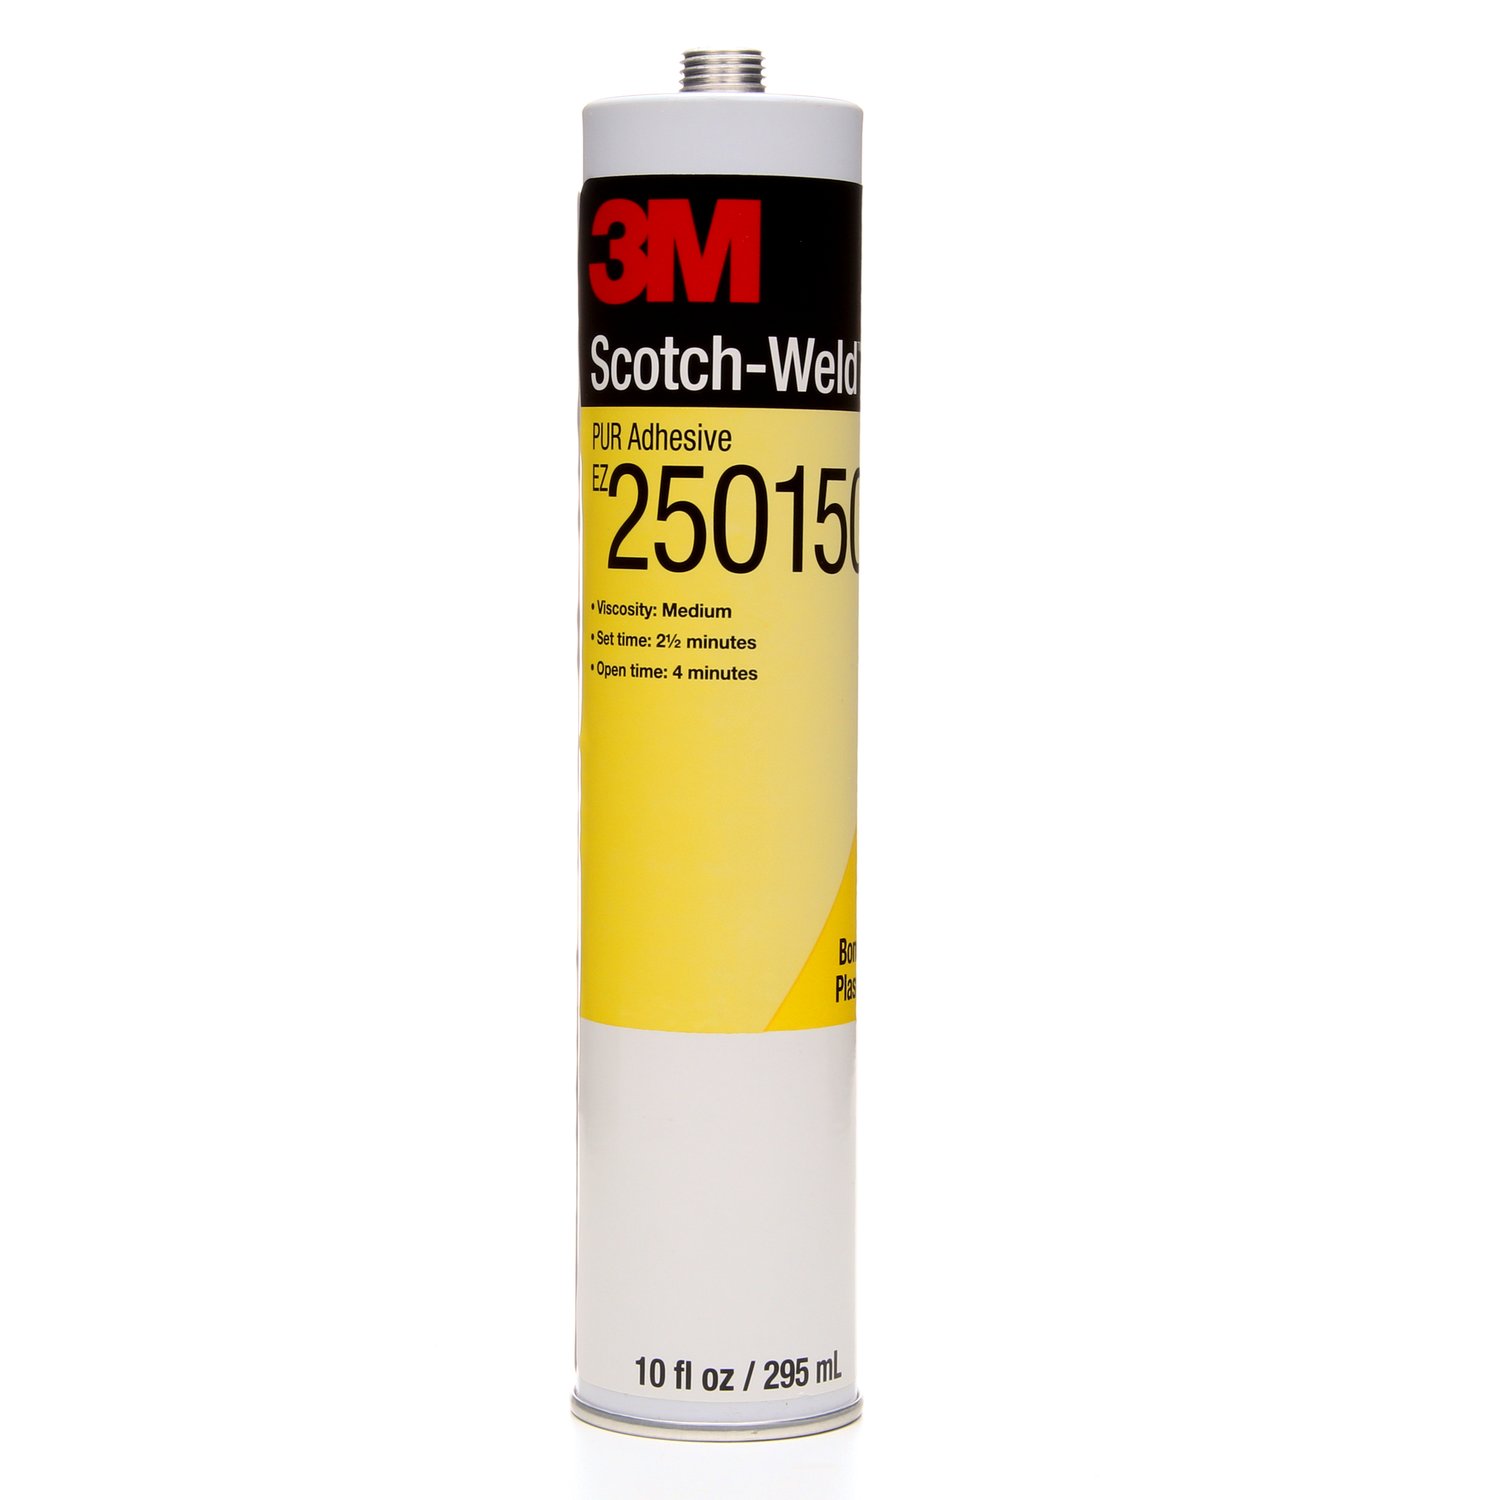 7000046533 - 3M Scotch-Weld PUR Adhesive EZ250150, Off-White, 1/10 Gallon Cartidge,
5 Each/Case